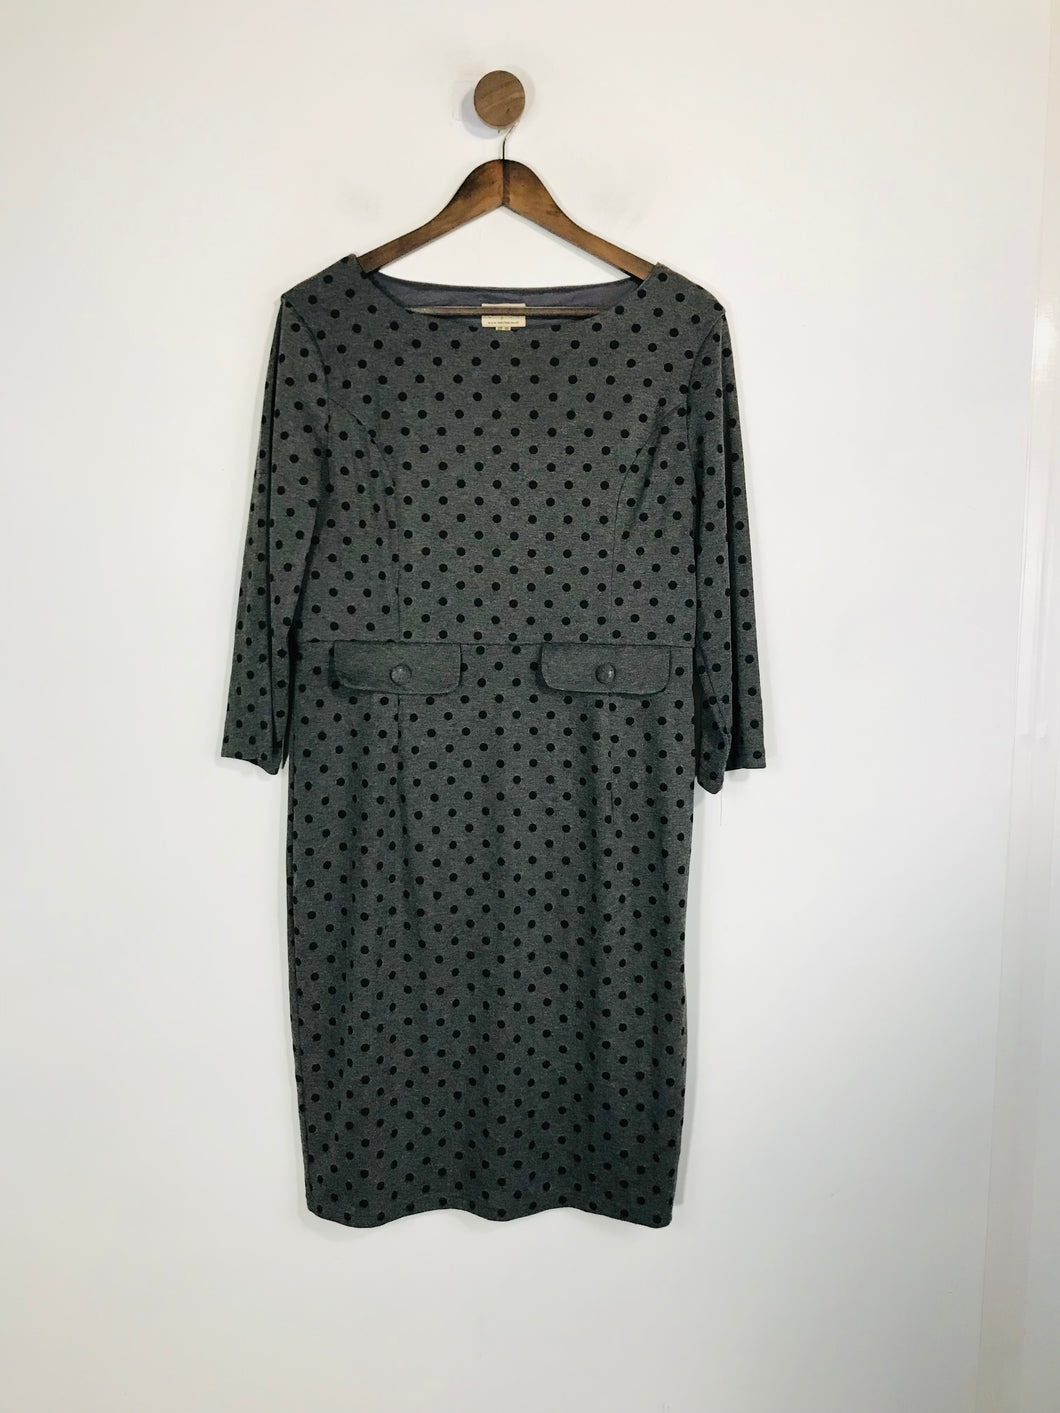 Lindy Bop Women's Polka Dot Sheath Dress | UK16 | Grey